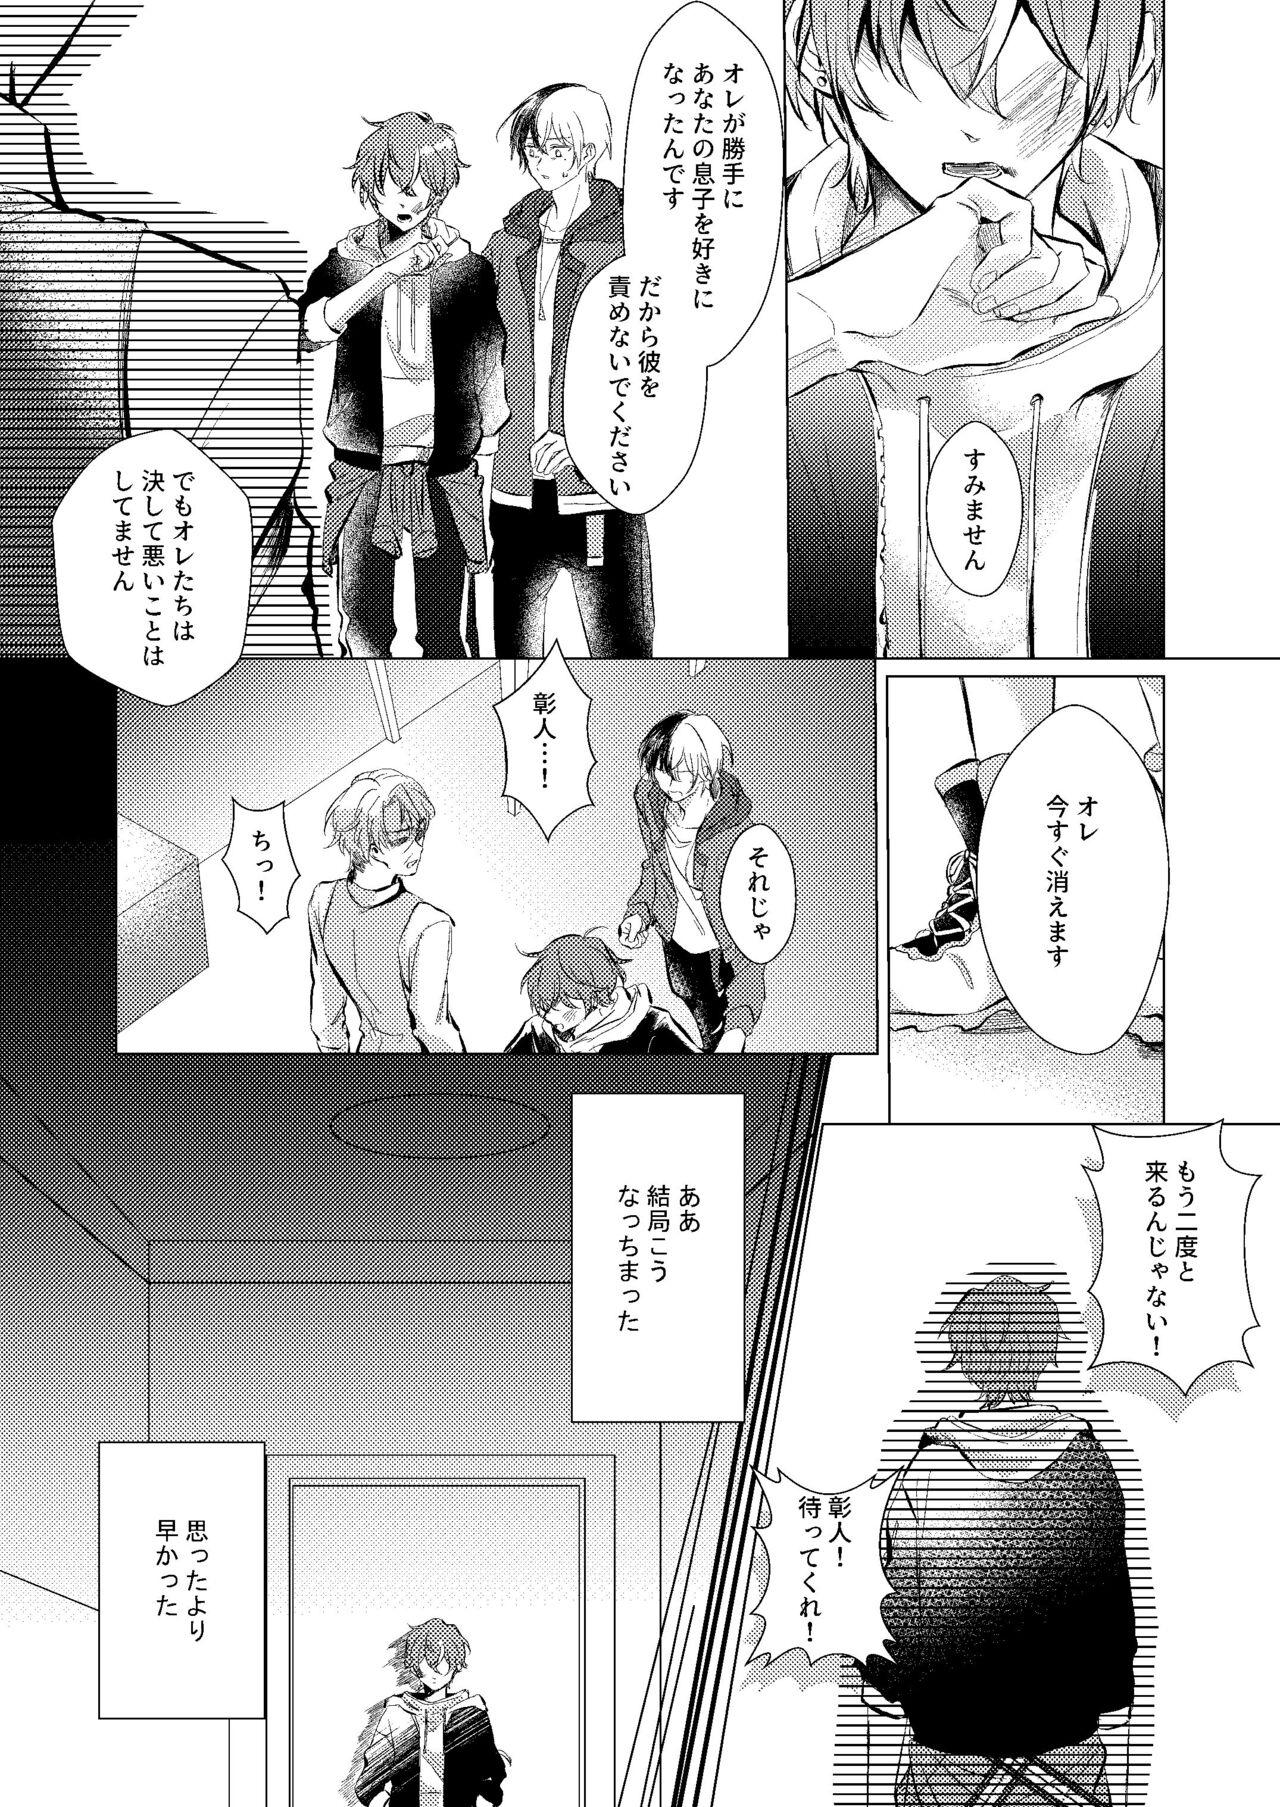 Cop Shiawase no Touhikou - Project sekai Sperm - Page 7